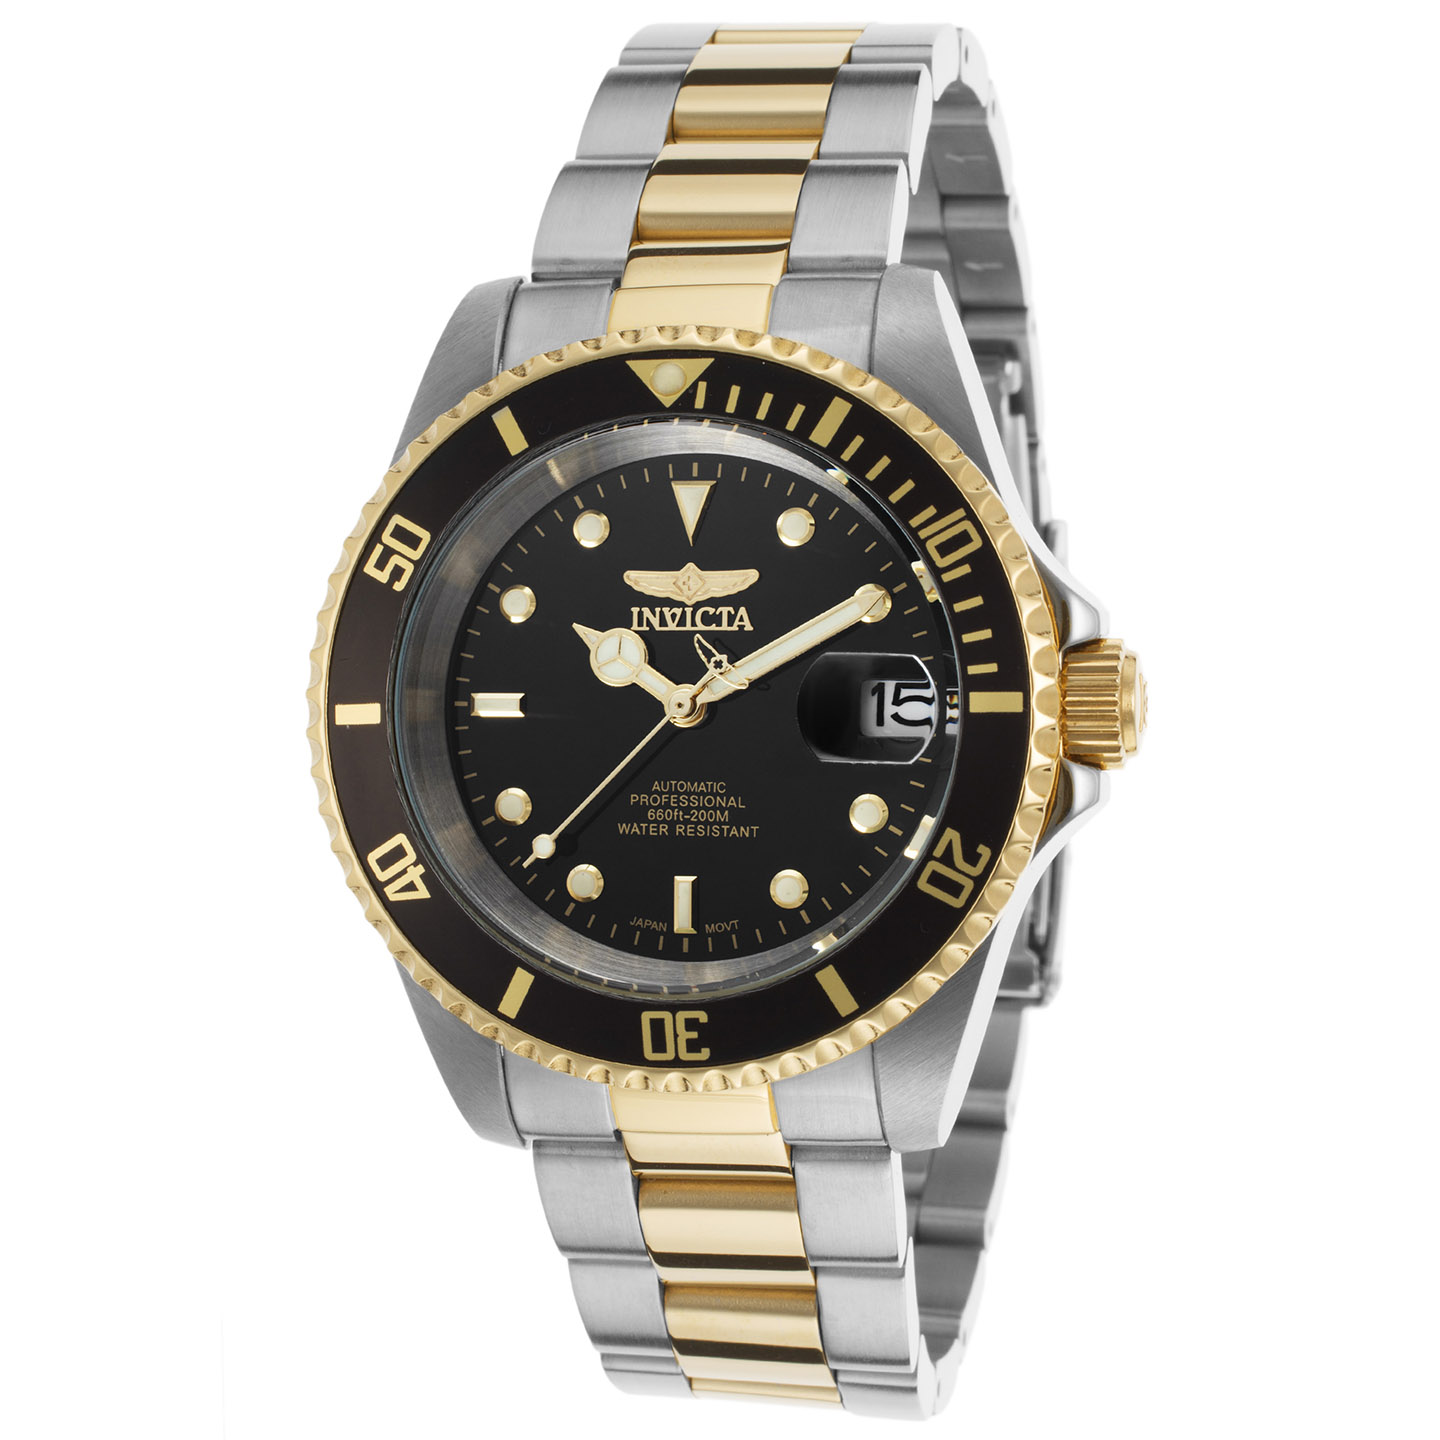 Invicta Pro Diver Automatic Men's Watch - 40mm, Steel, Gold (8927OB)